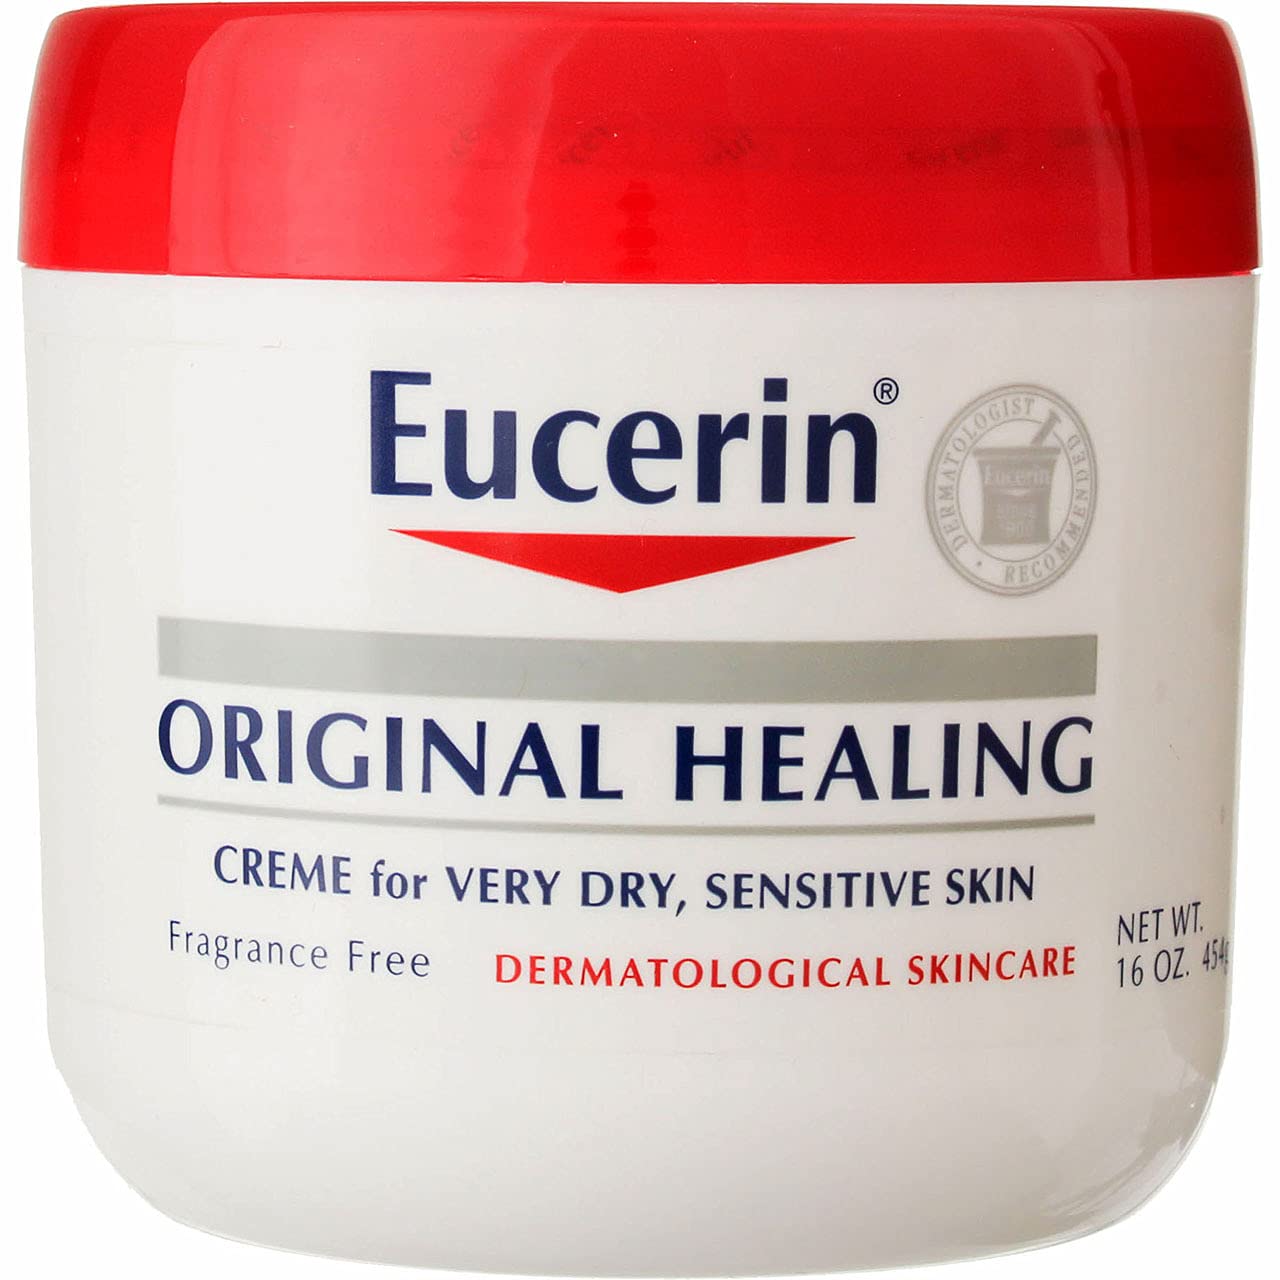 Eucerin Original Healing Cream For Skin Fragrance Free oz (454 g)